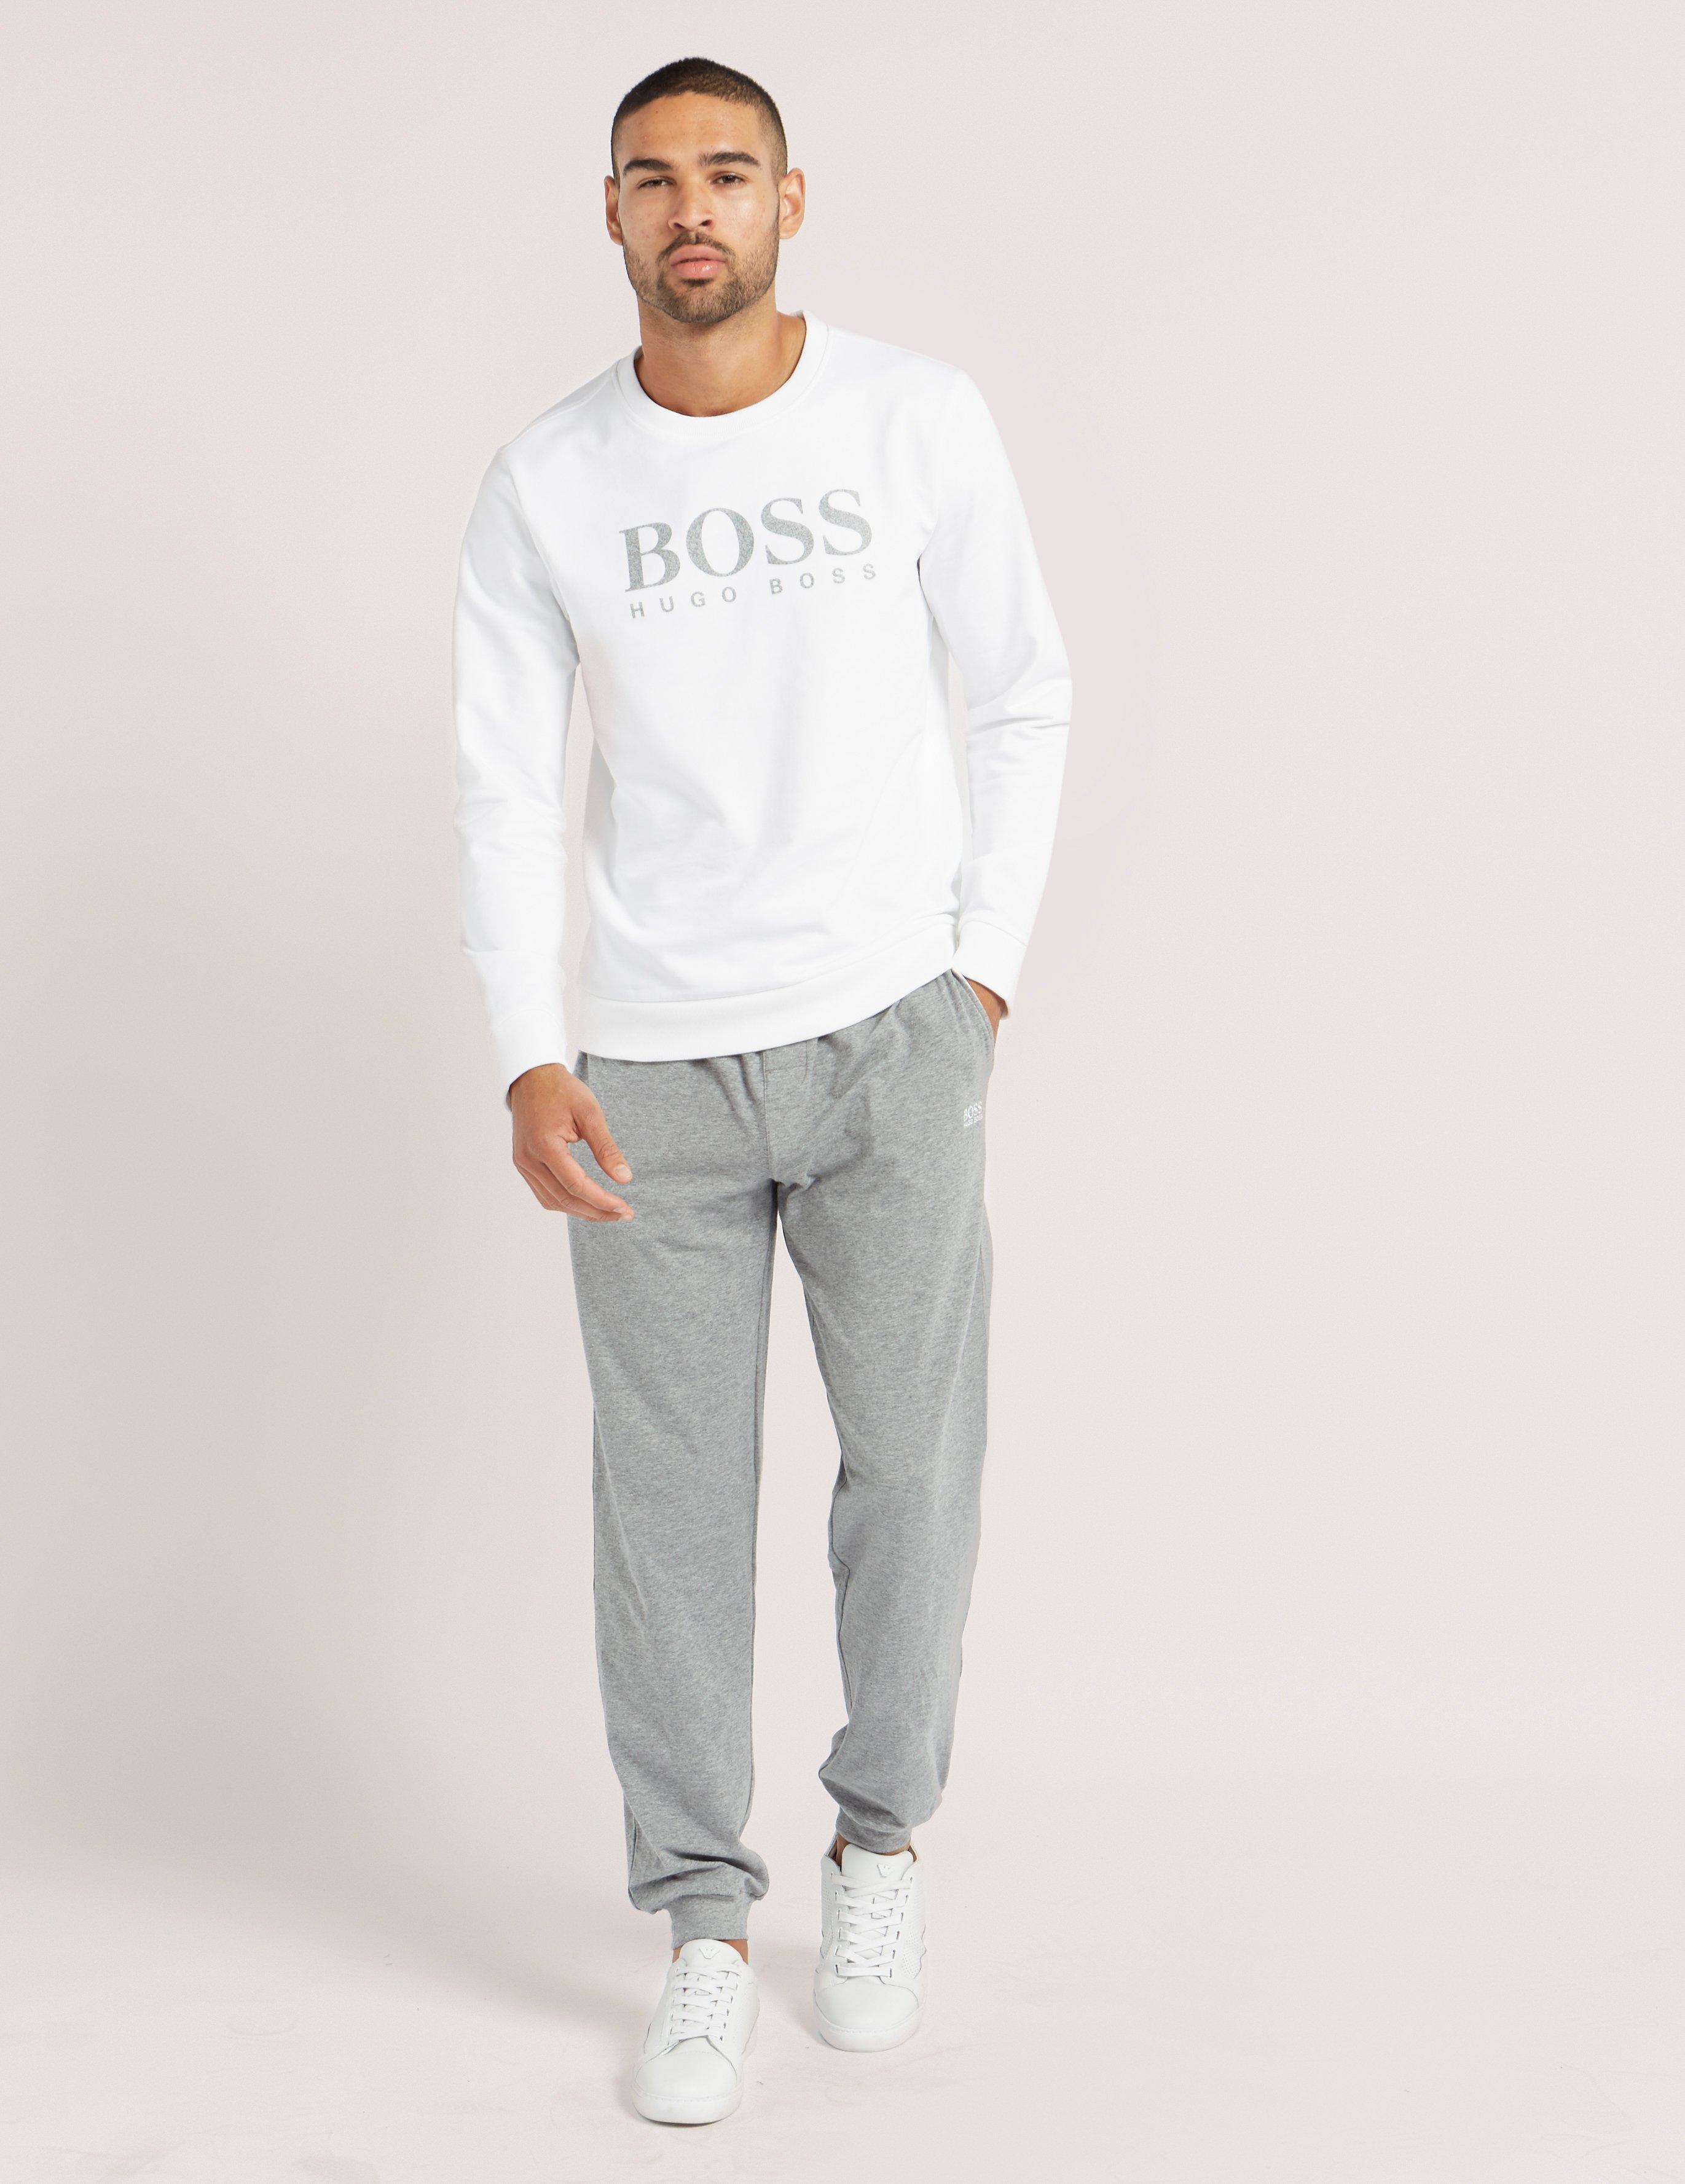 BOSS by Hugo Boss Cotton Heritage Logo Sweatshirt in White for Men - Lyst